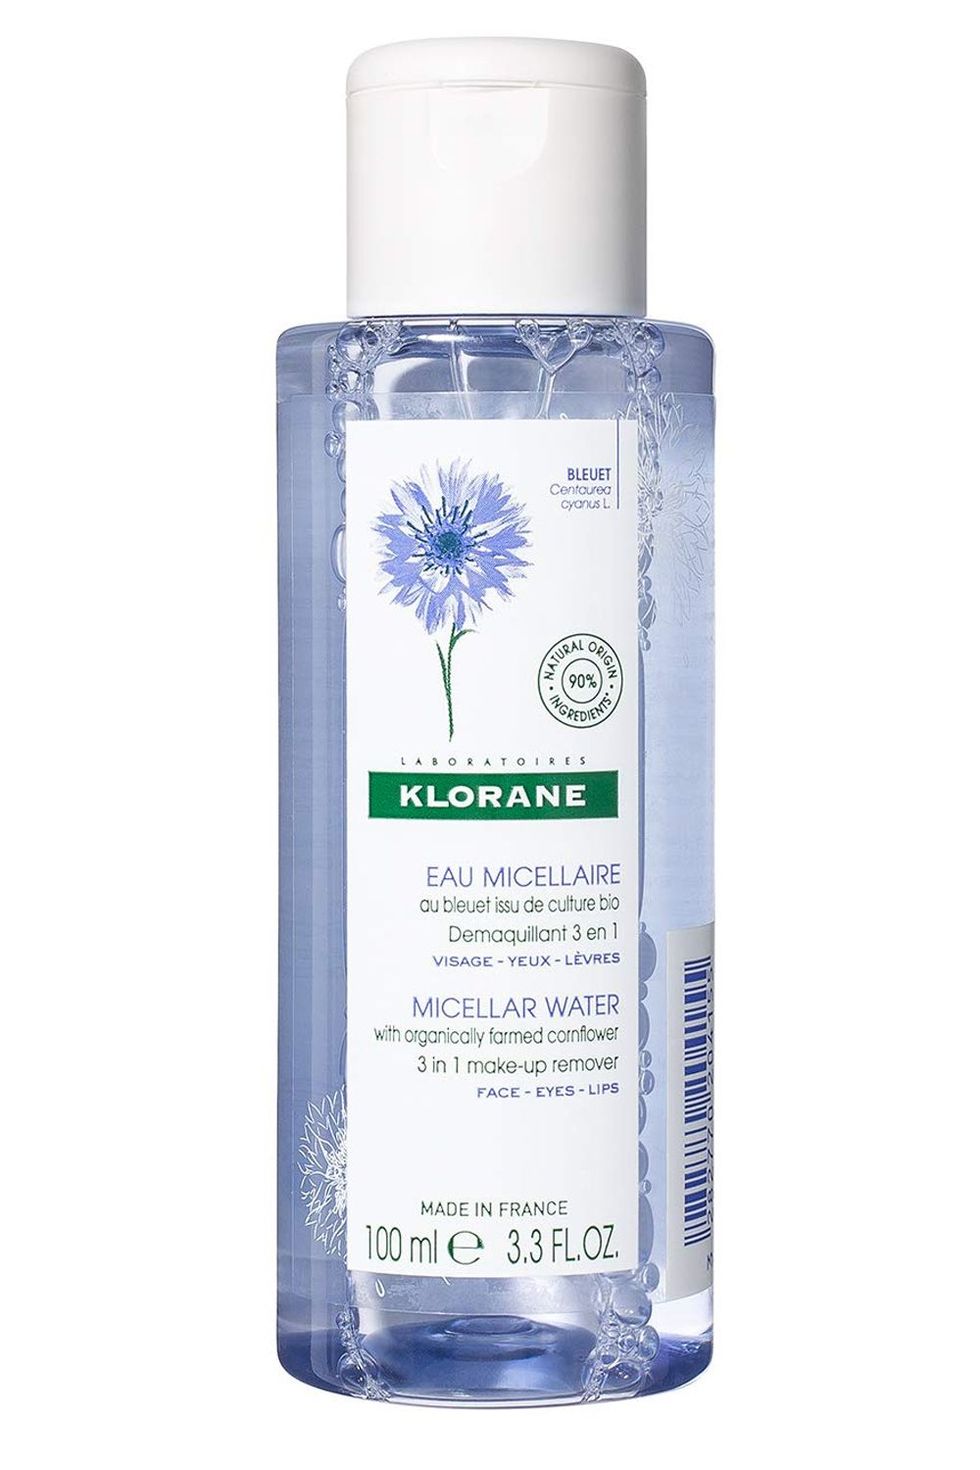 Klorane Micellar Water with Soothing Cornflower